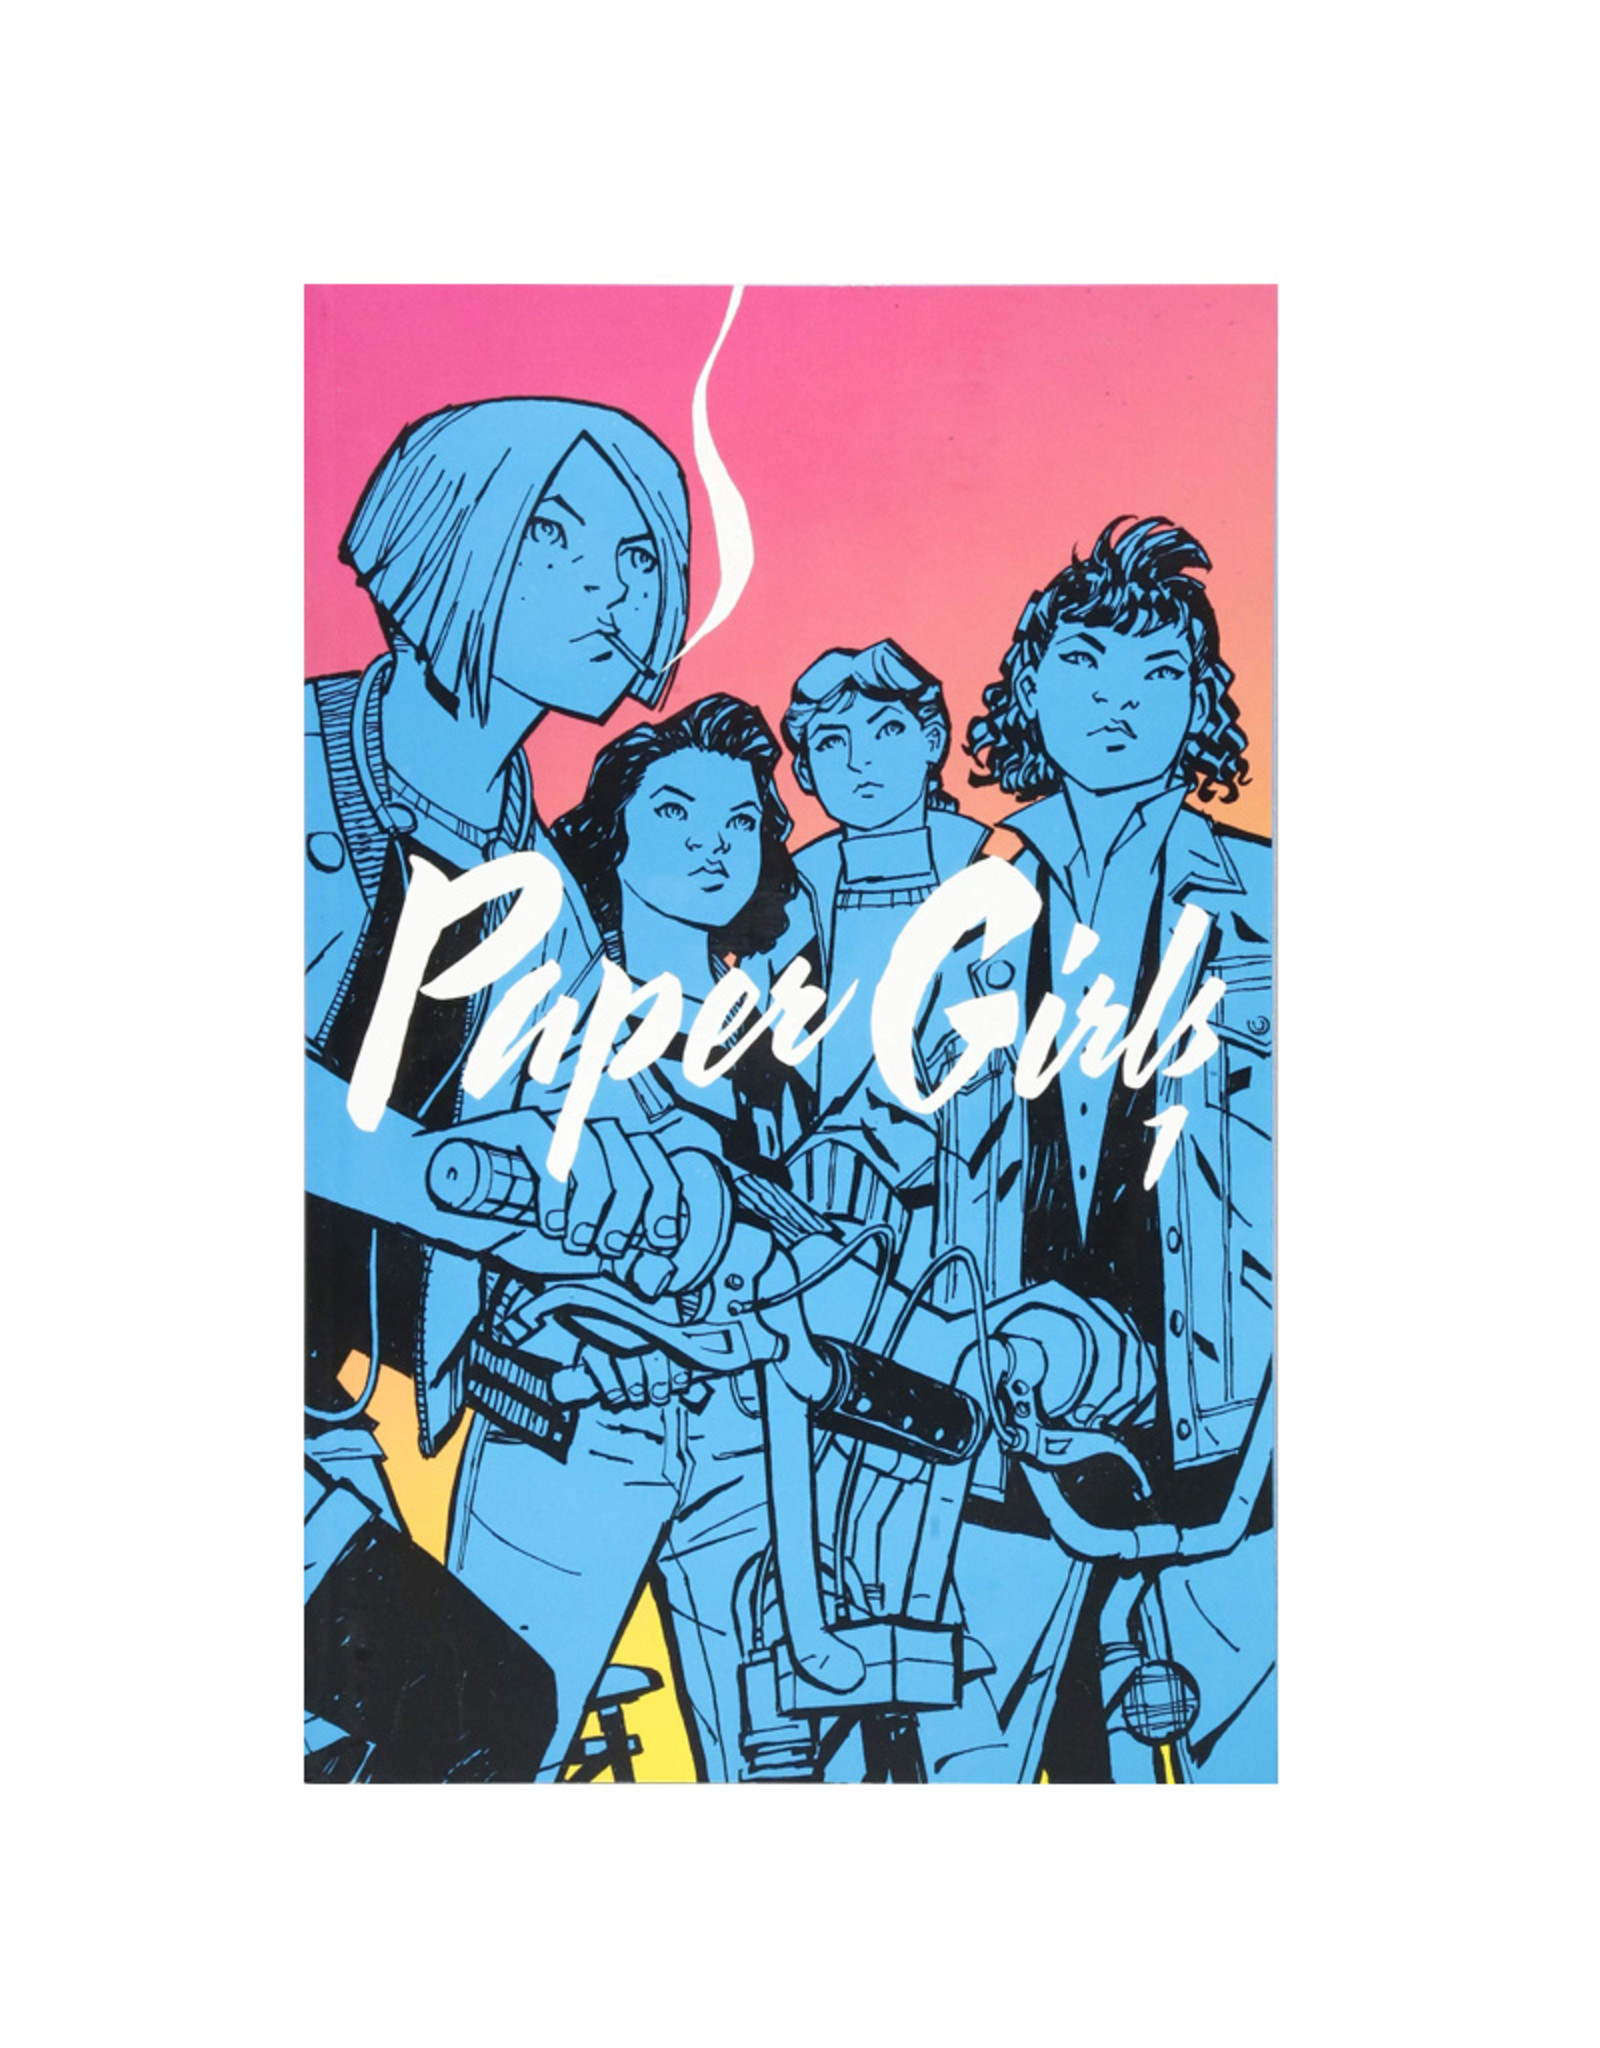 Image Comics Paper Girls TP Volume 01